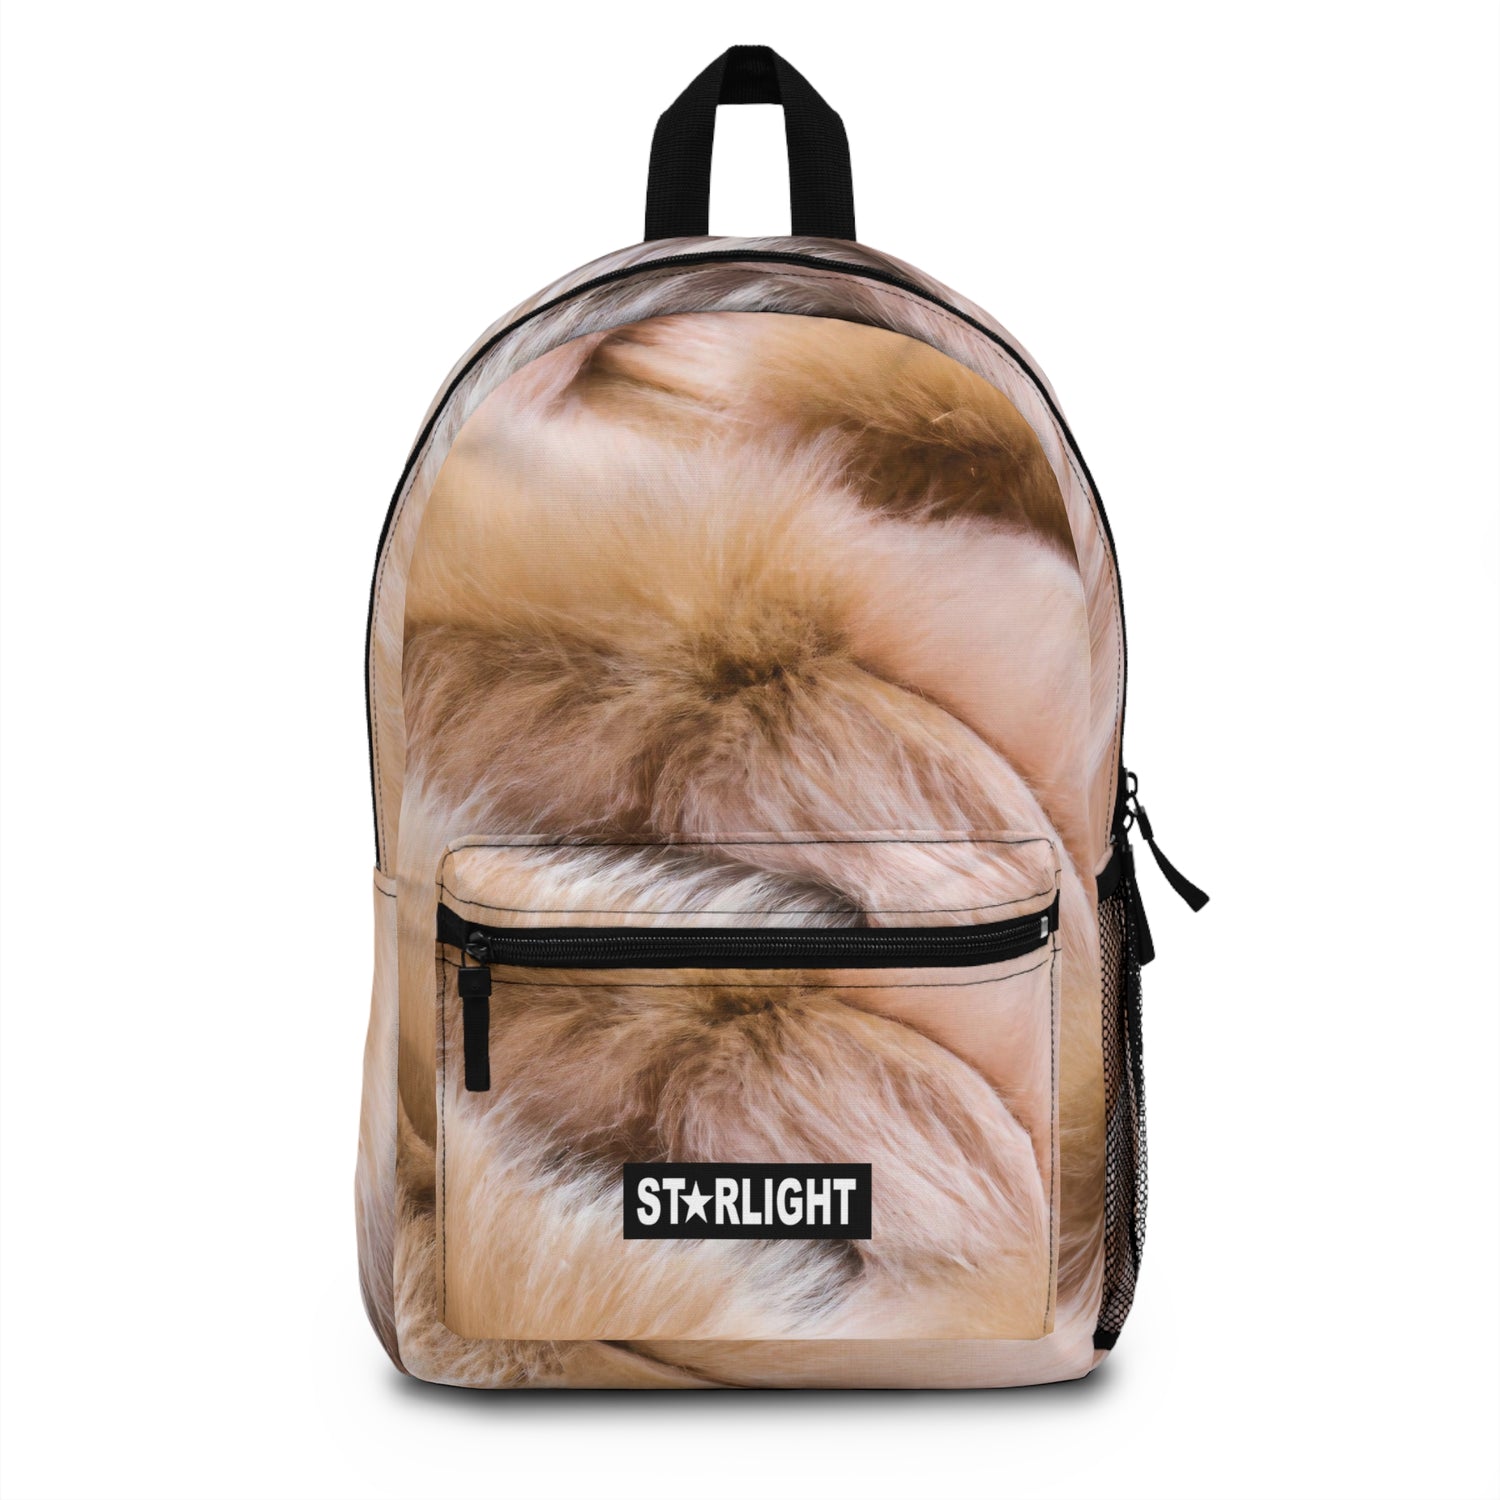 DaVinci2050 - Backpack